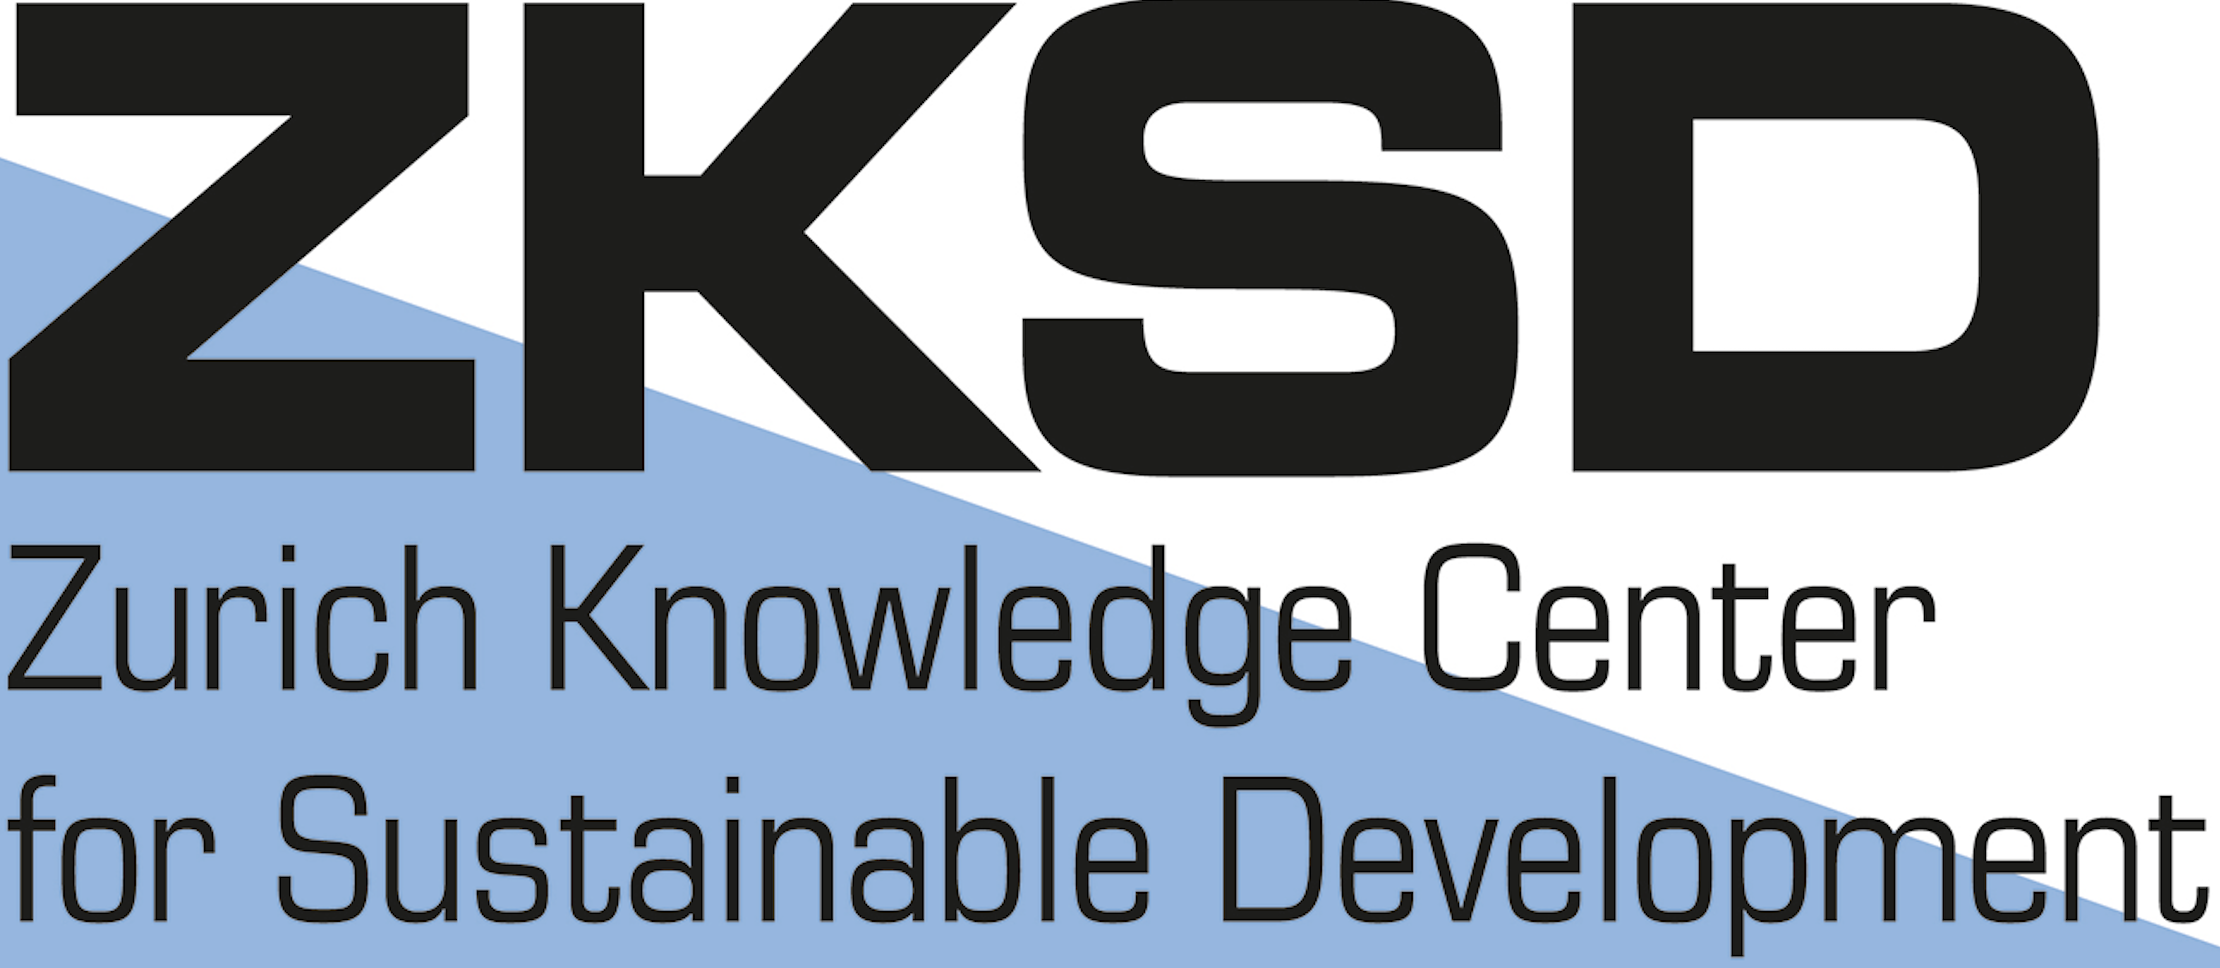 ZKSD Logo